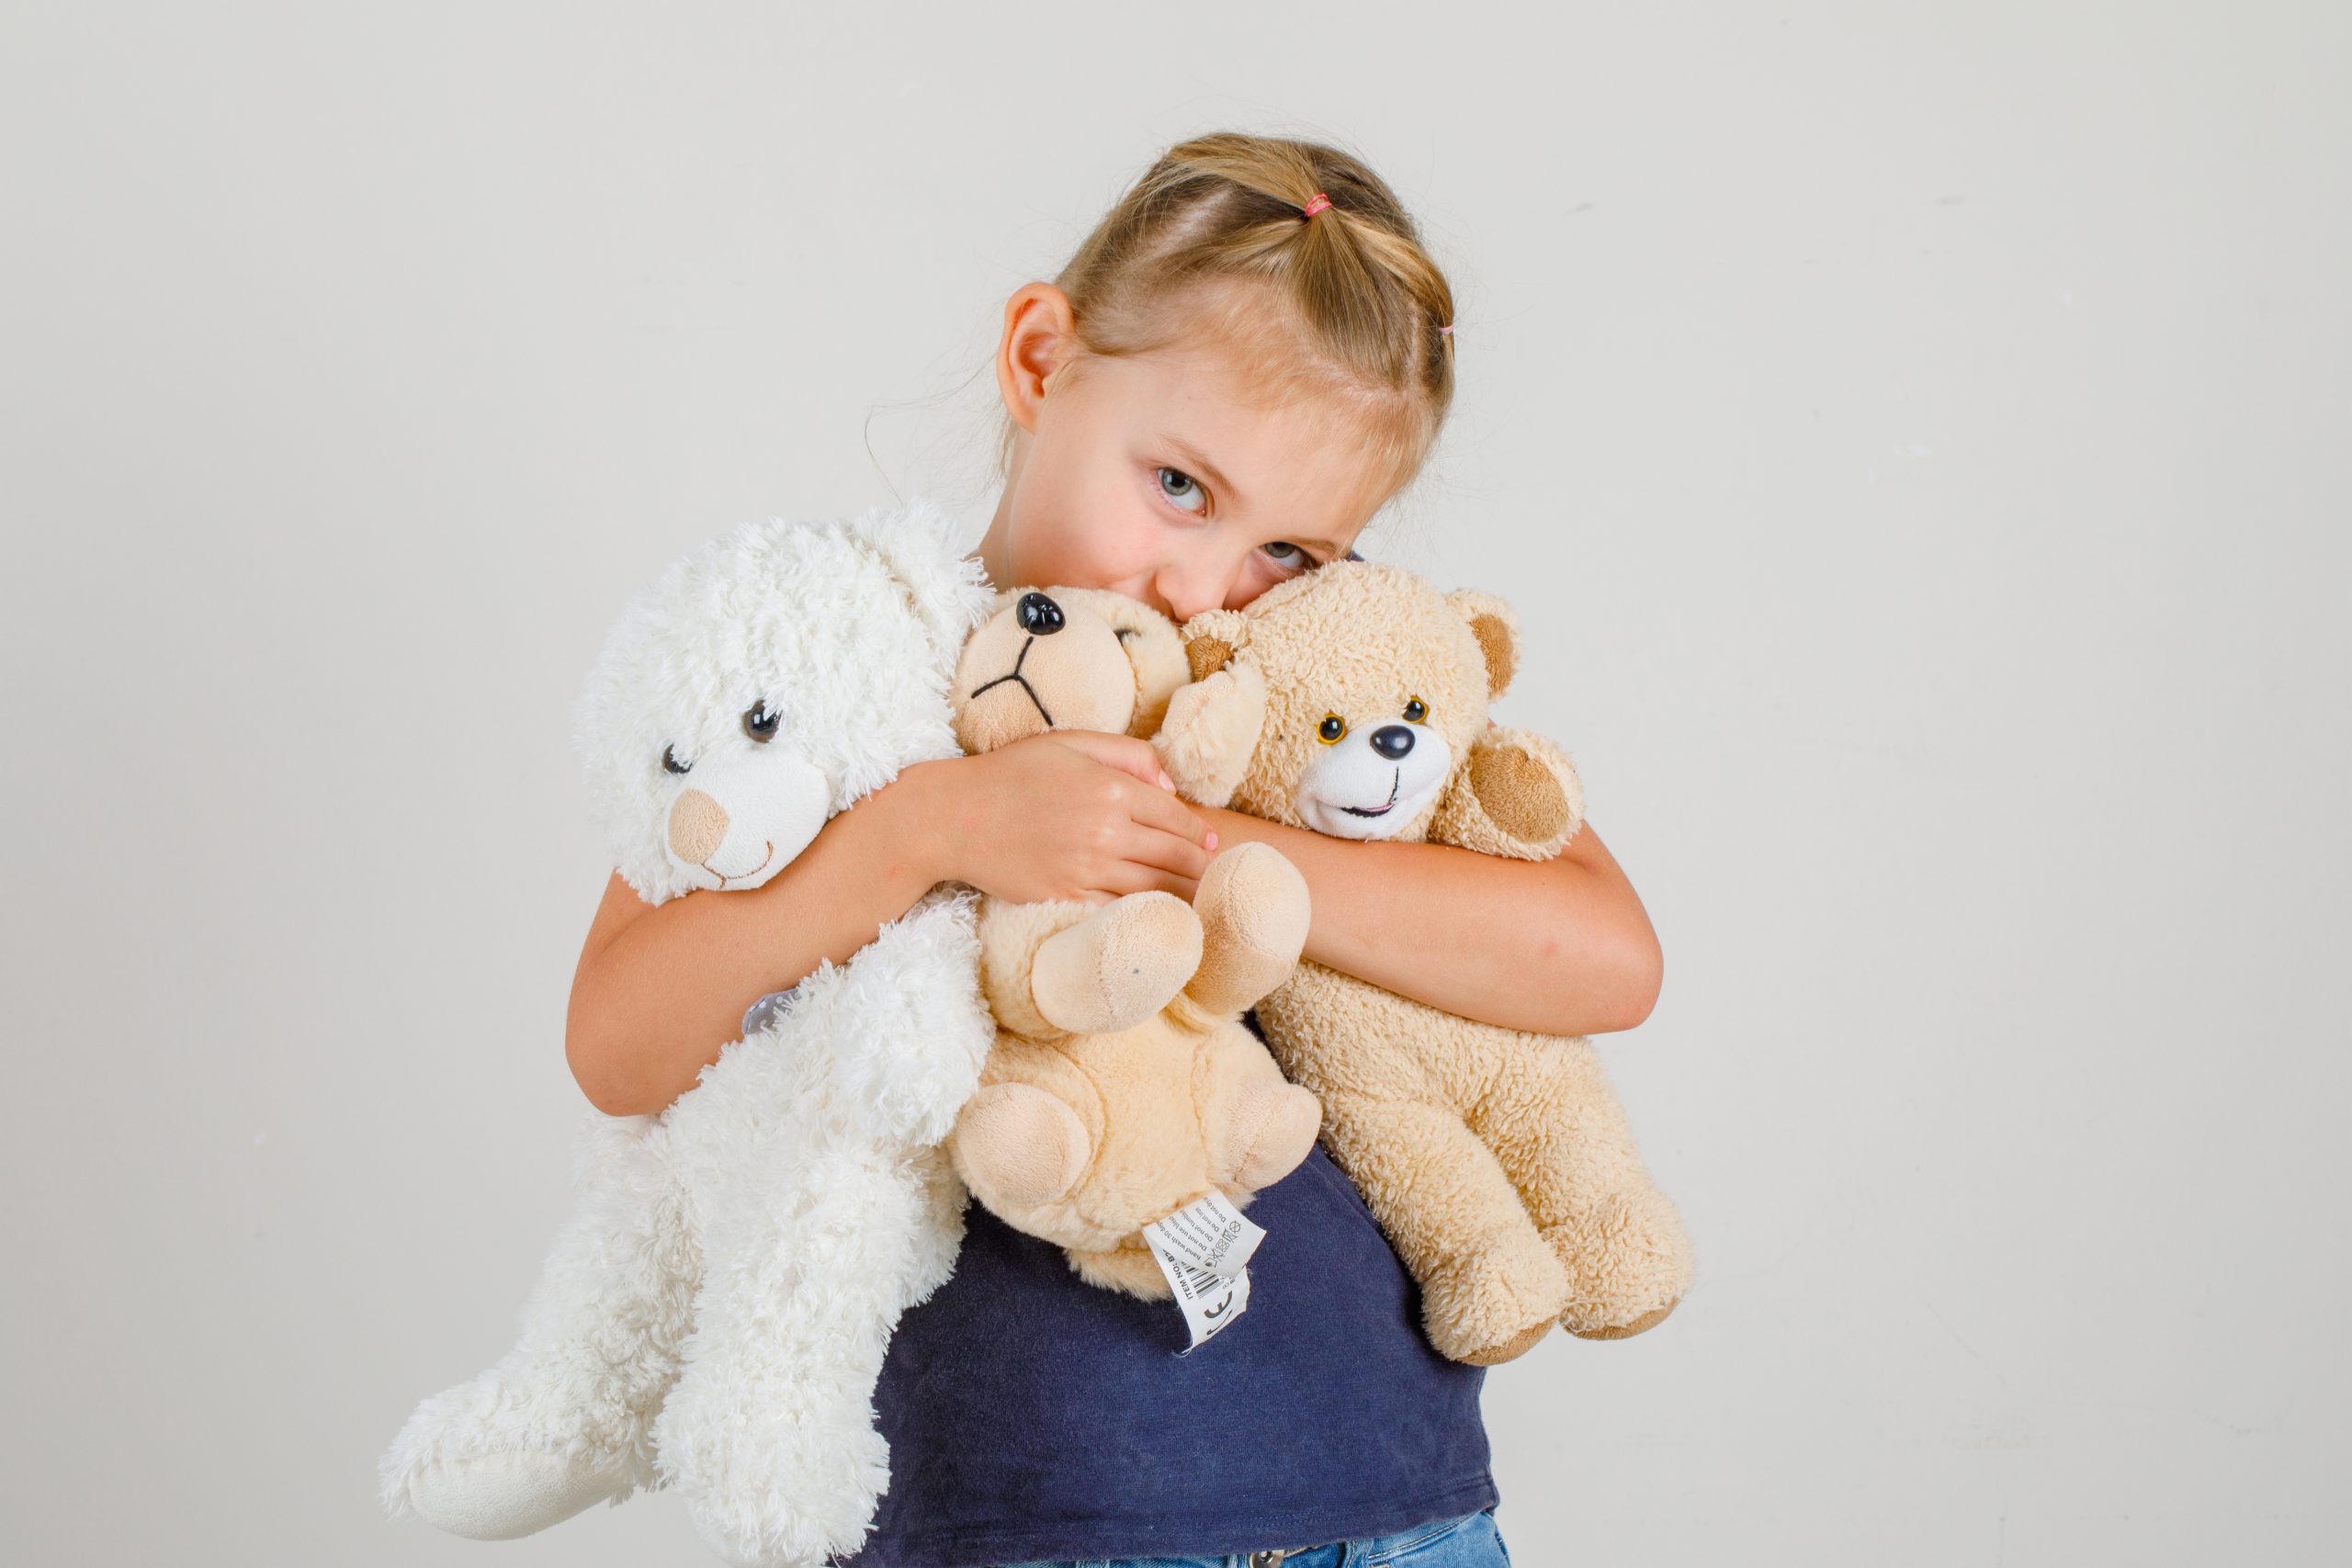 mainan boneka organik - Little girl hugging teddy bears and smiling in t-shirt and denim skirt , front view.